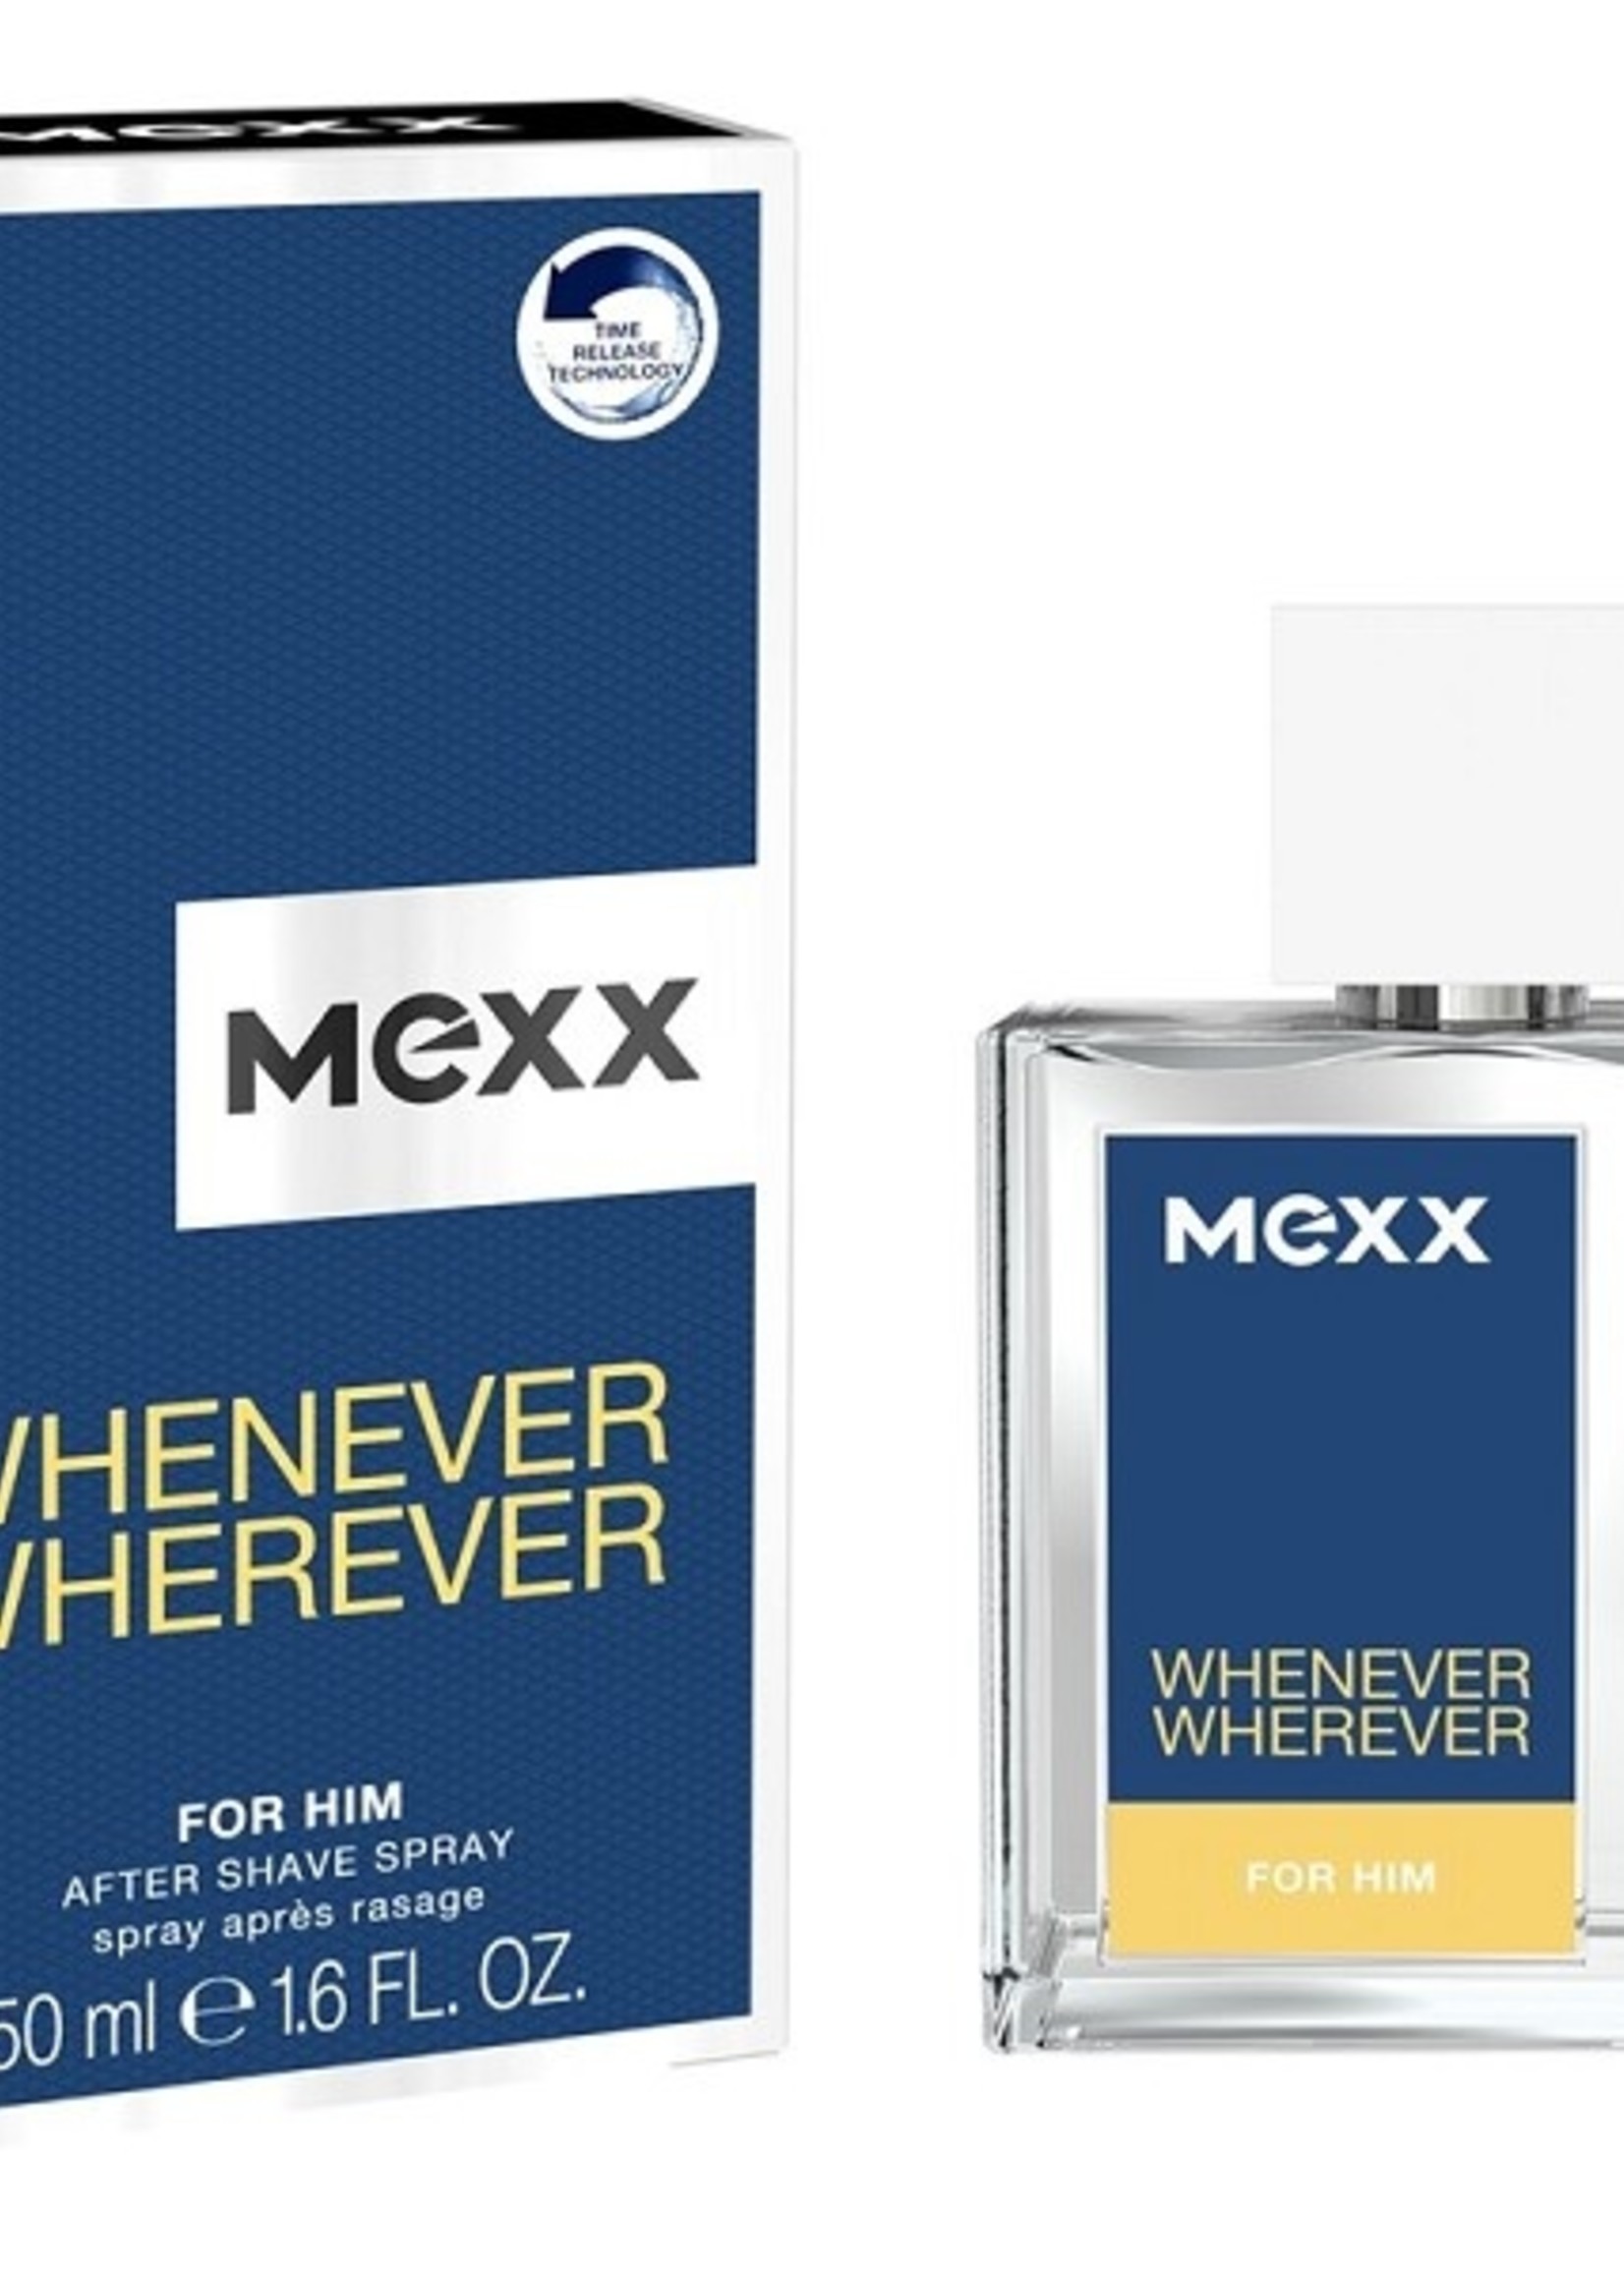 Mexx Whenever Wherever eau de toilette for men 50ml